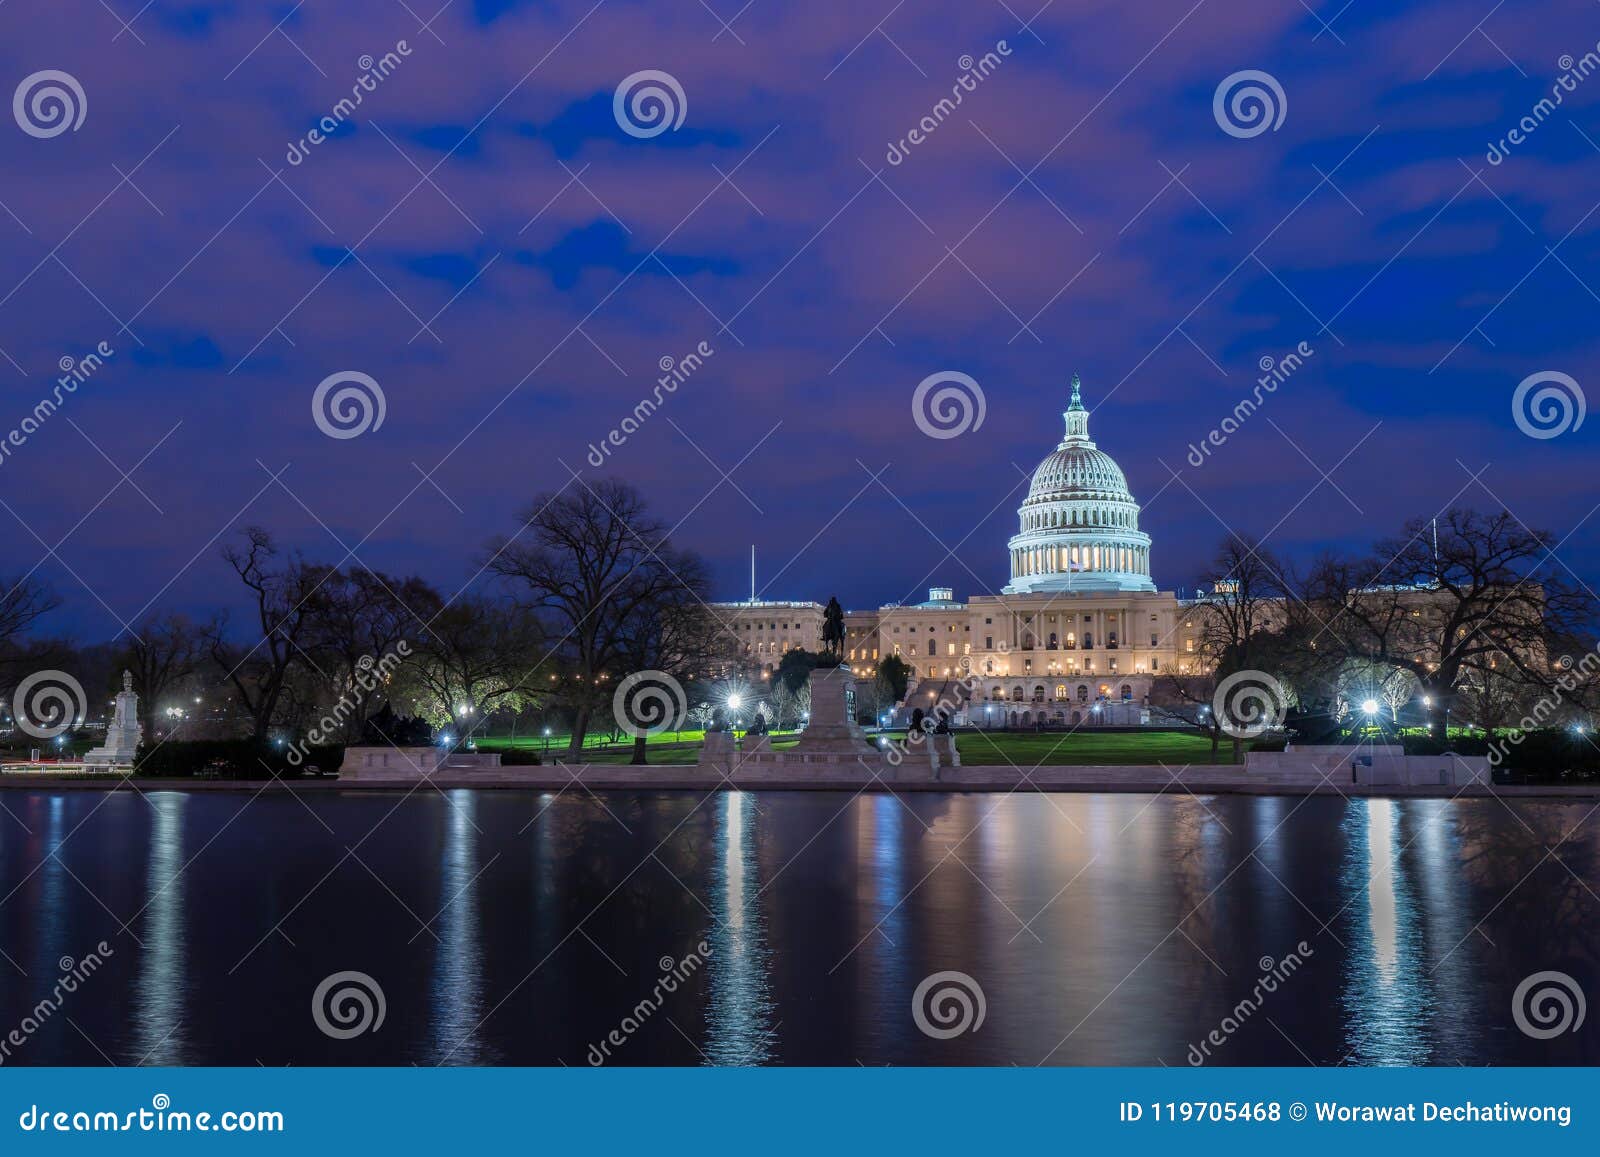 the united states capitol with reflection at night, washington dc, usa